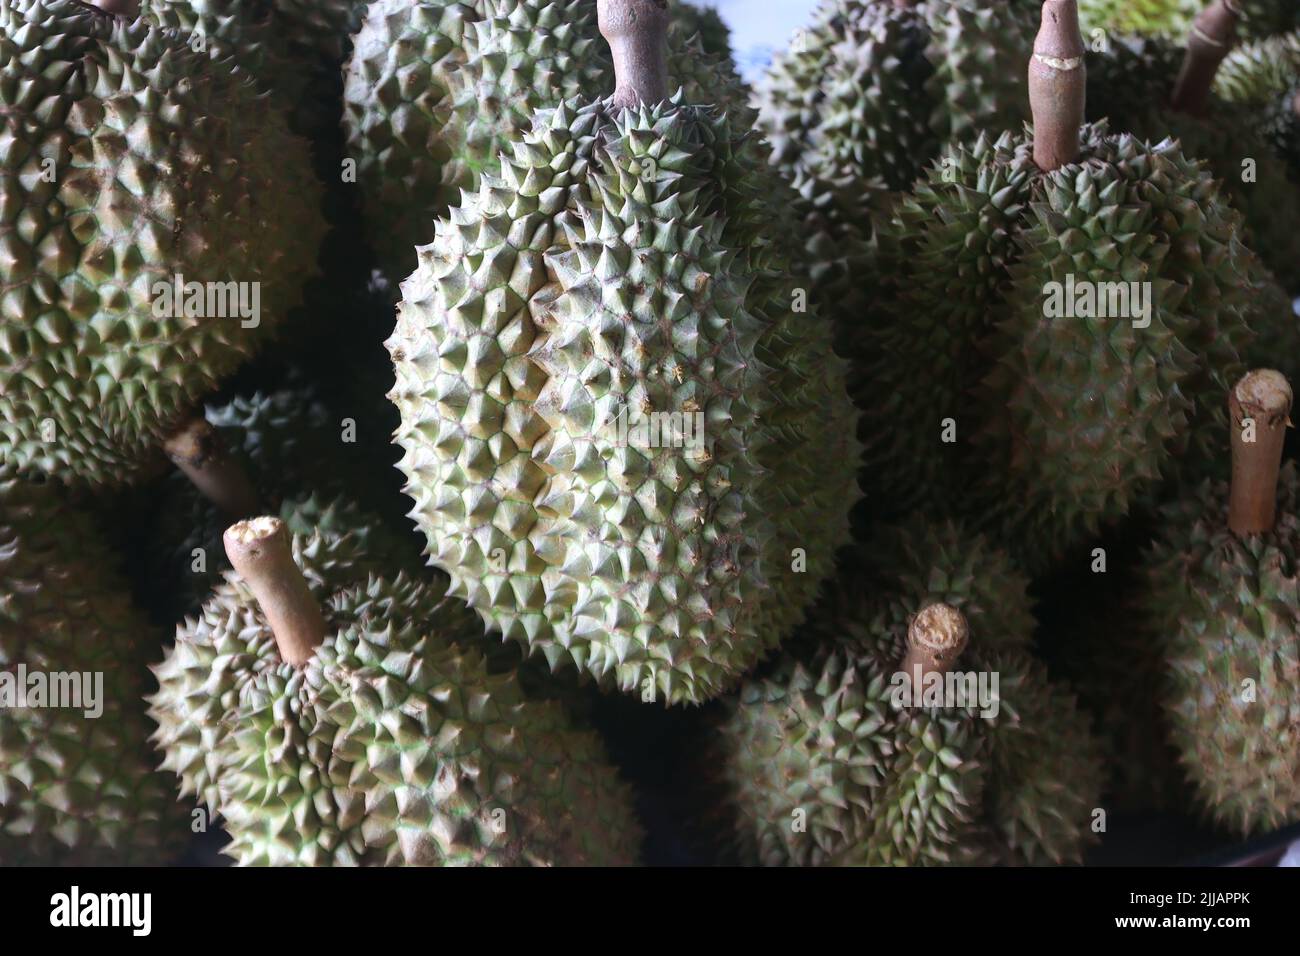 photo of durian fruit on market tray Stock Photo